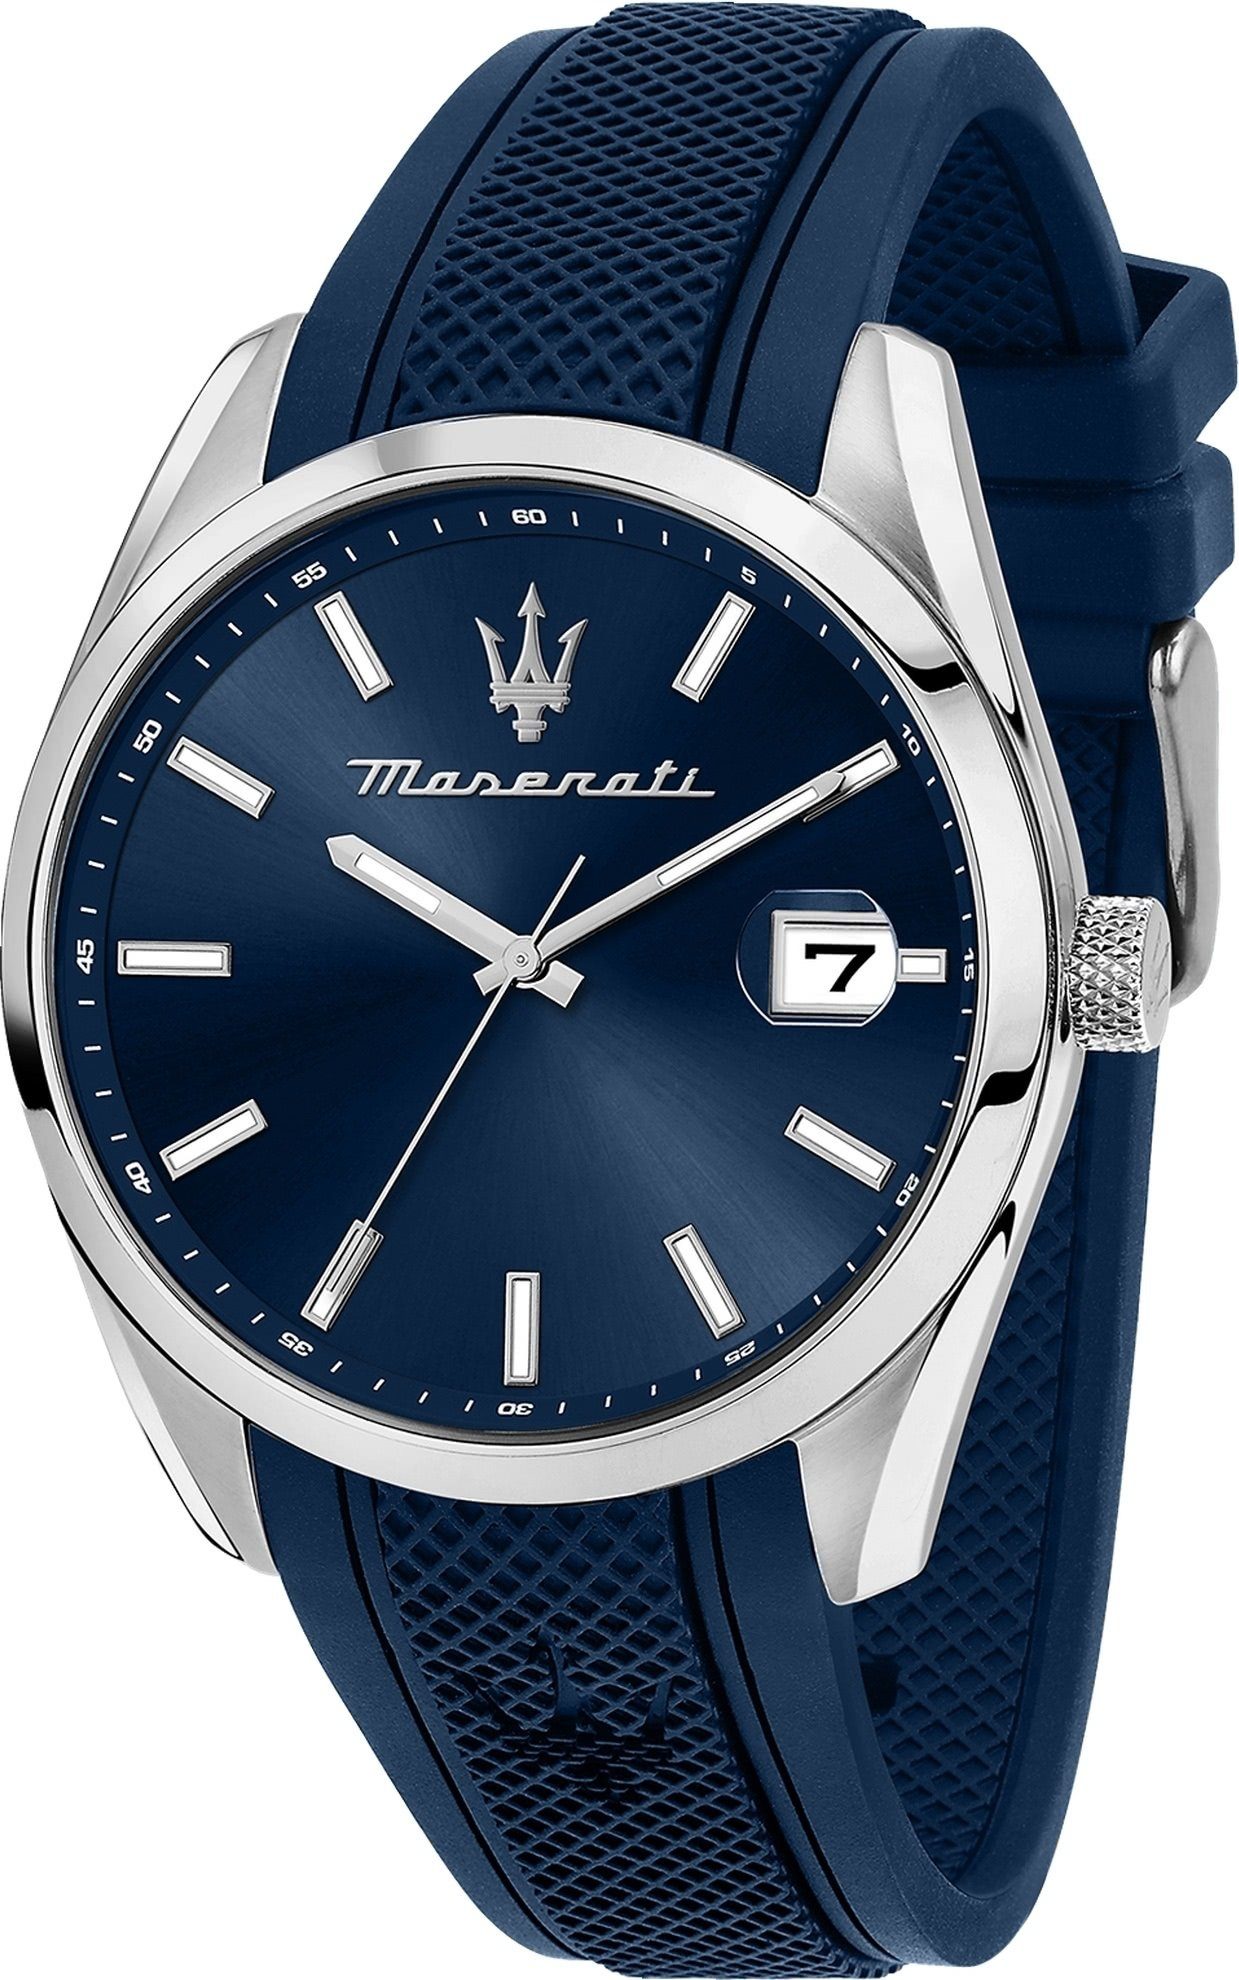 MASERATI Quarzuhr Maserati Herren Armband Attrazione, Herrenuhr rund, groß (ca. 43mm) Silikonarmband, Made-In Italy blau